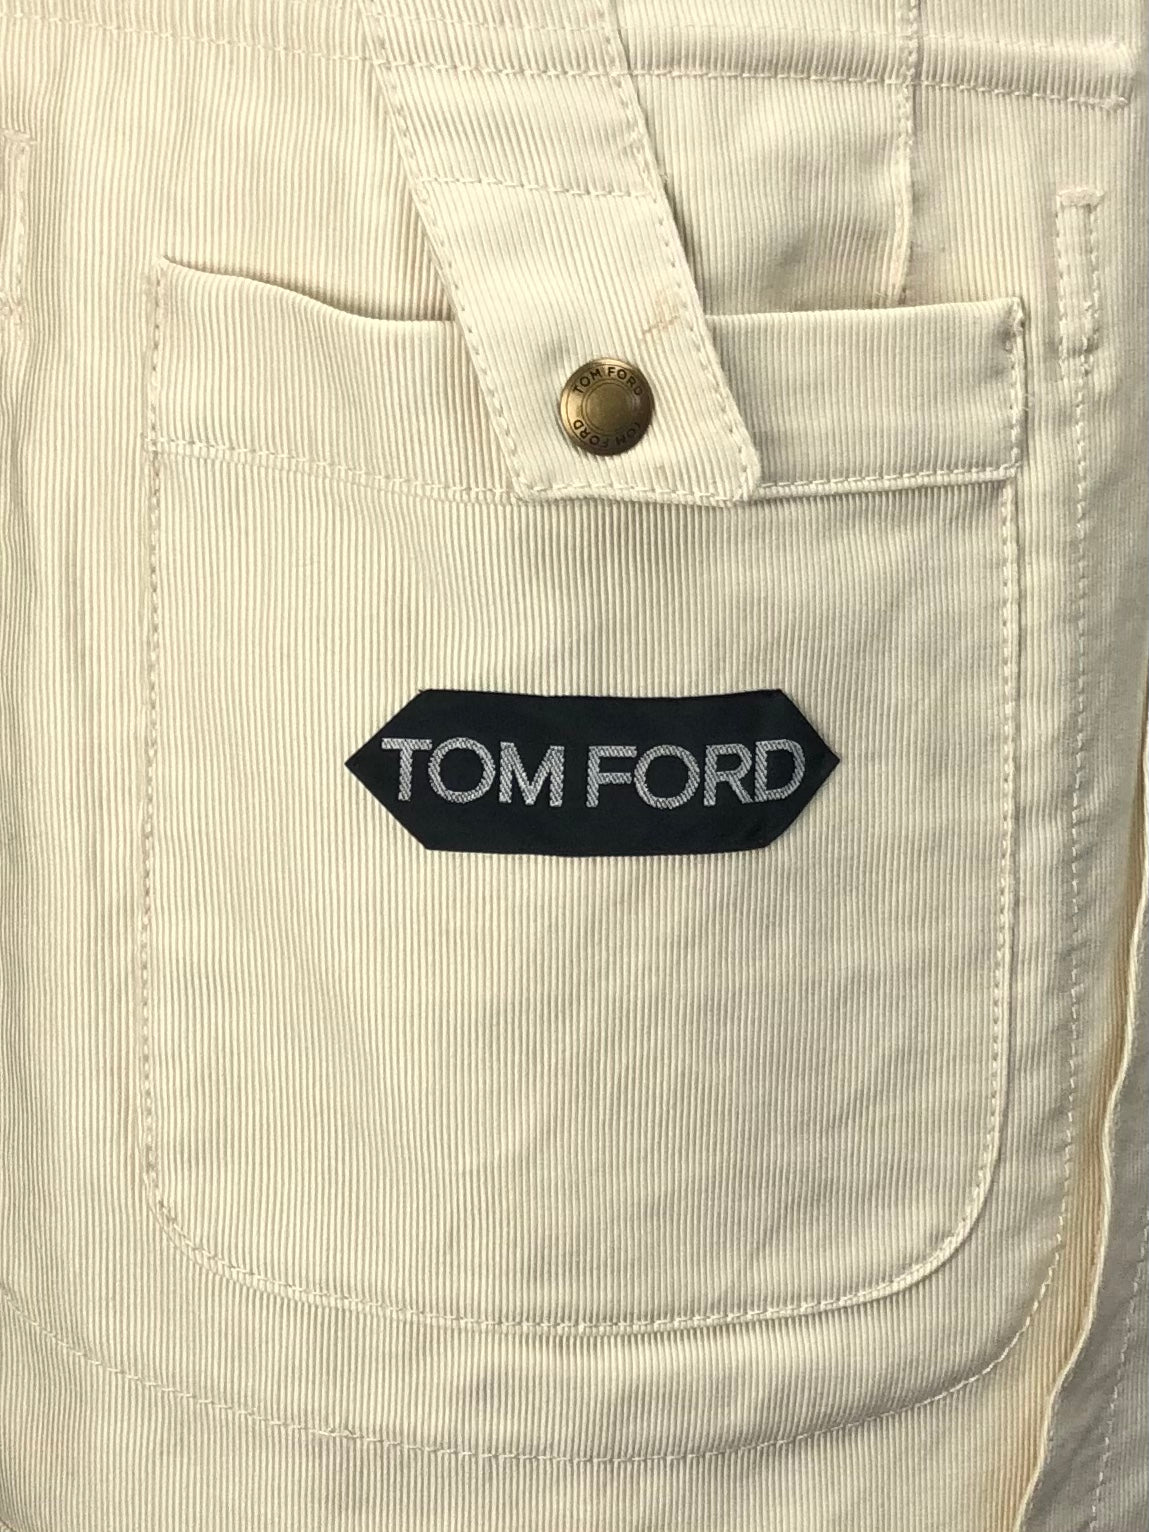 Tom Ford Safari Jacket